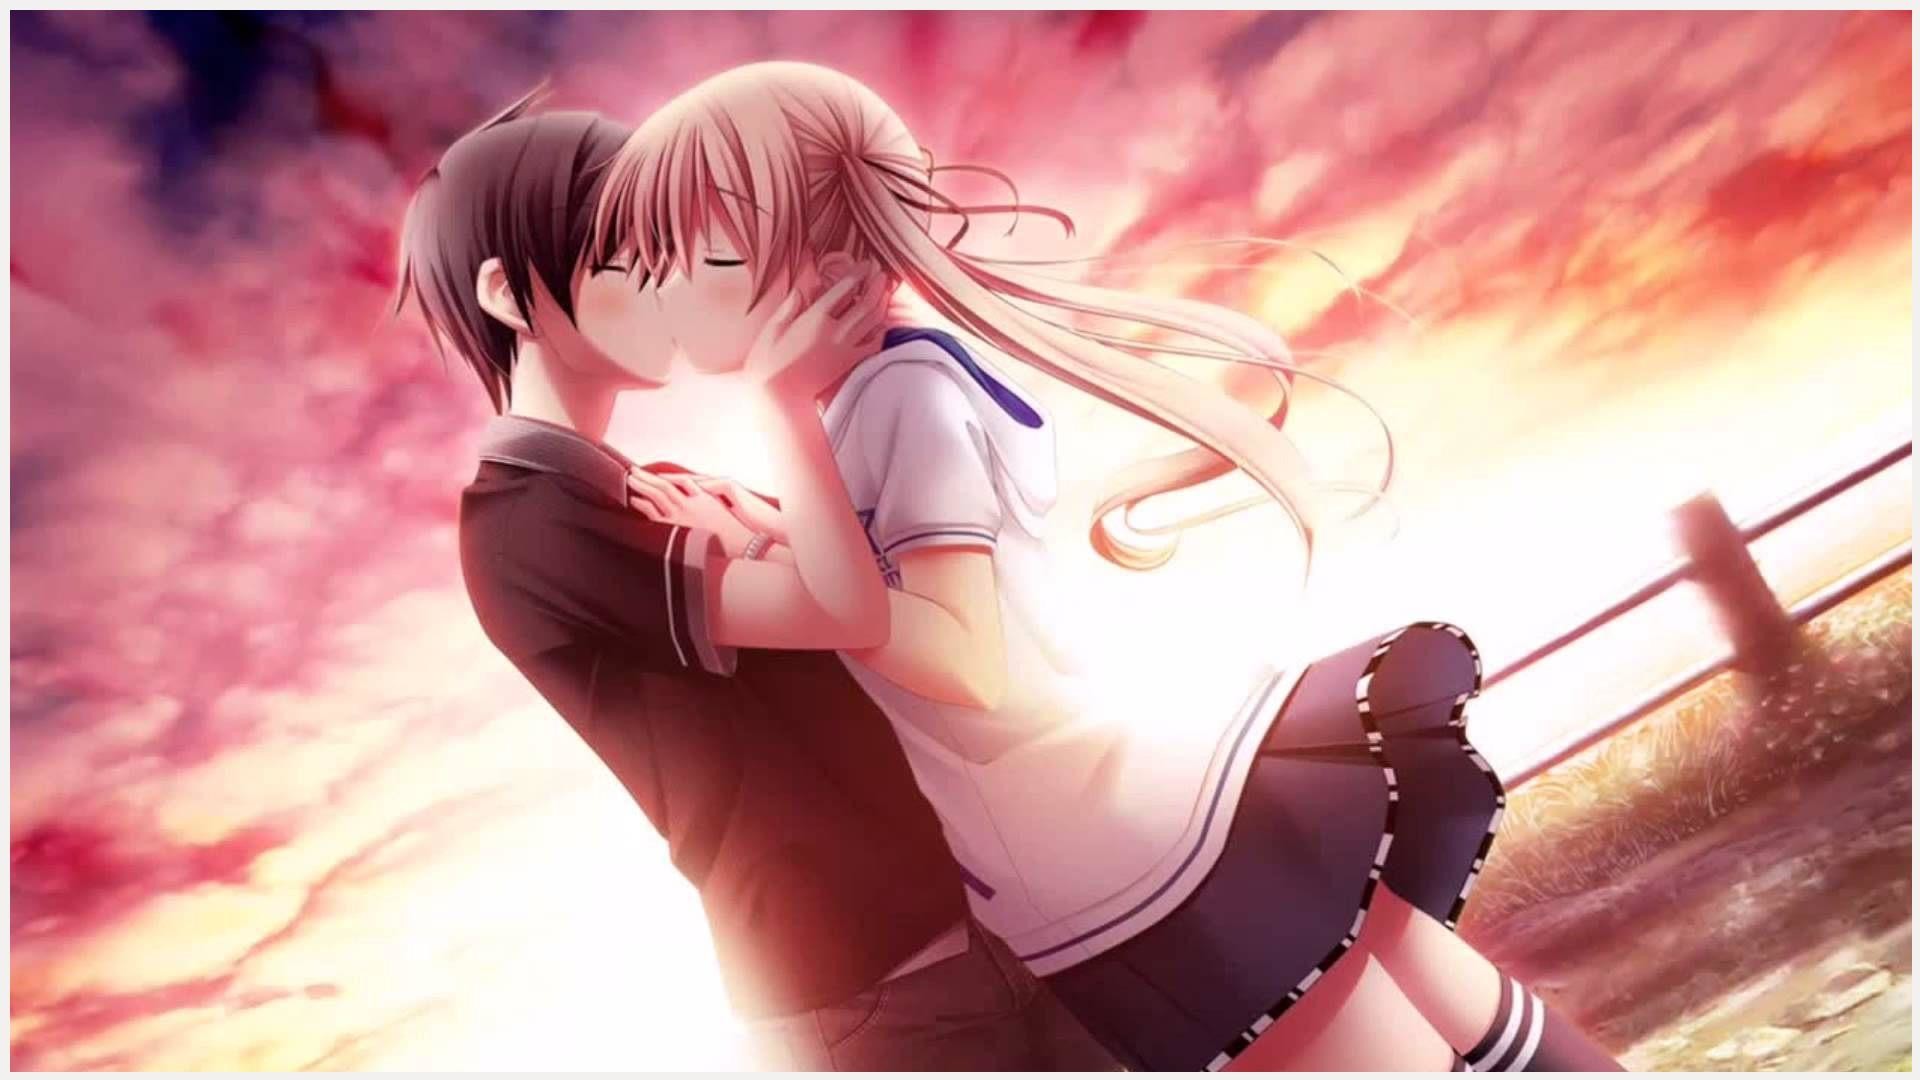 1920x1080 Love Kiss Of Cute Anime Couple Wallpaper